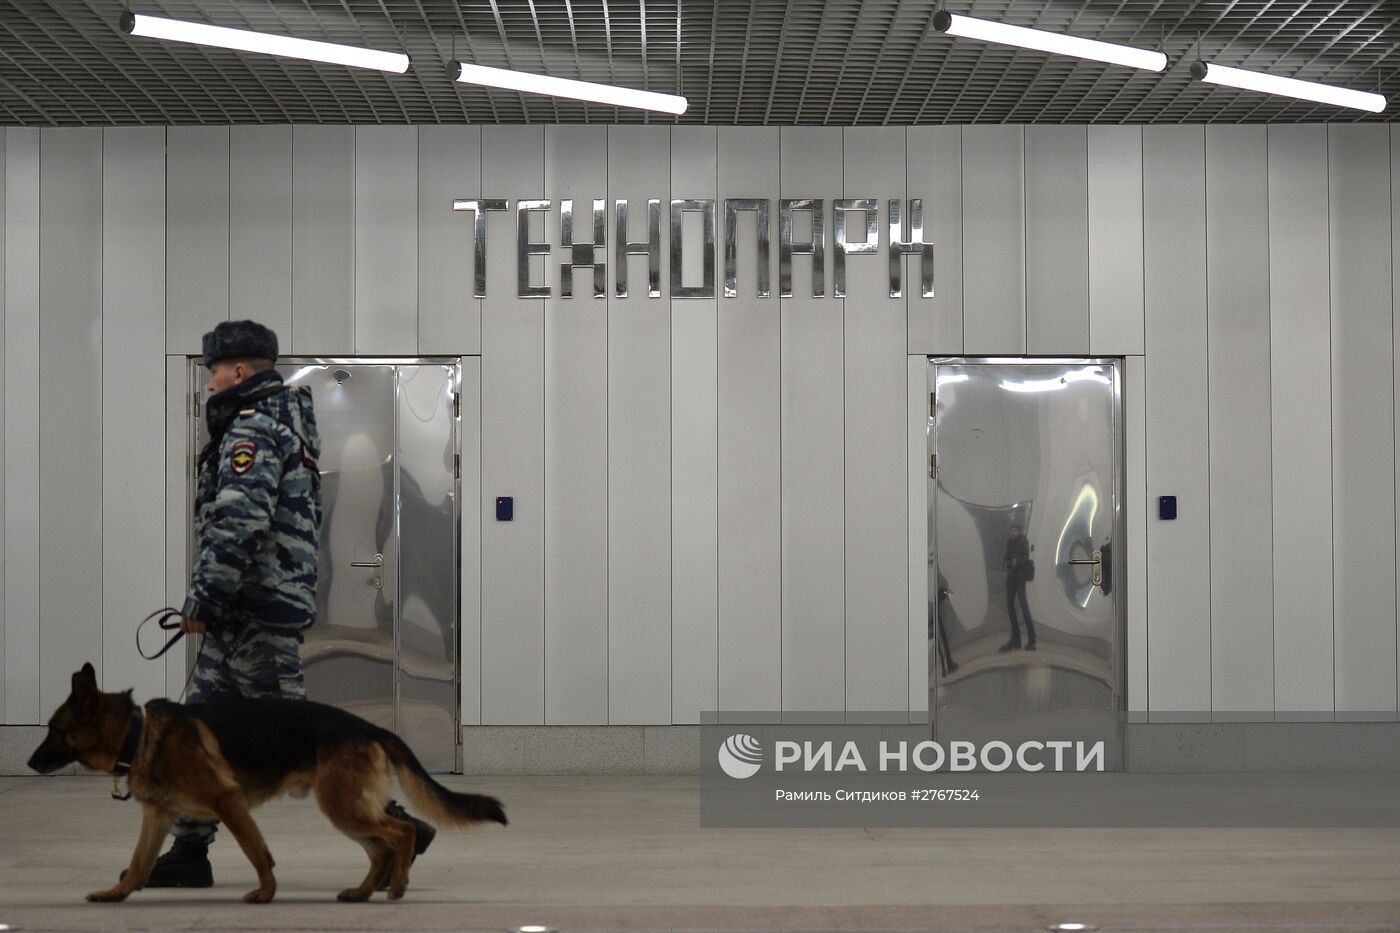 Открытие станции метро "Технопарк"